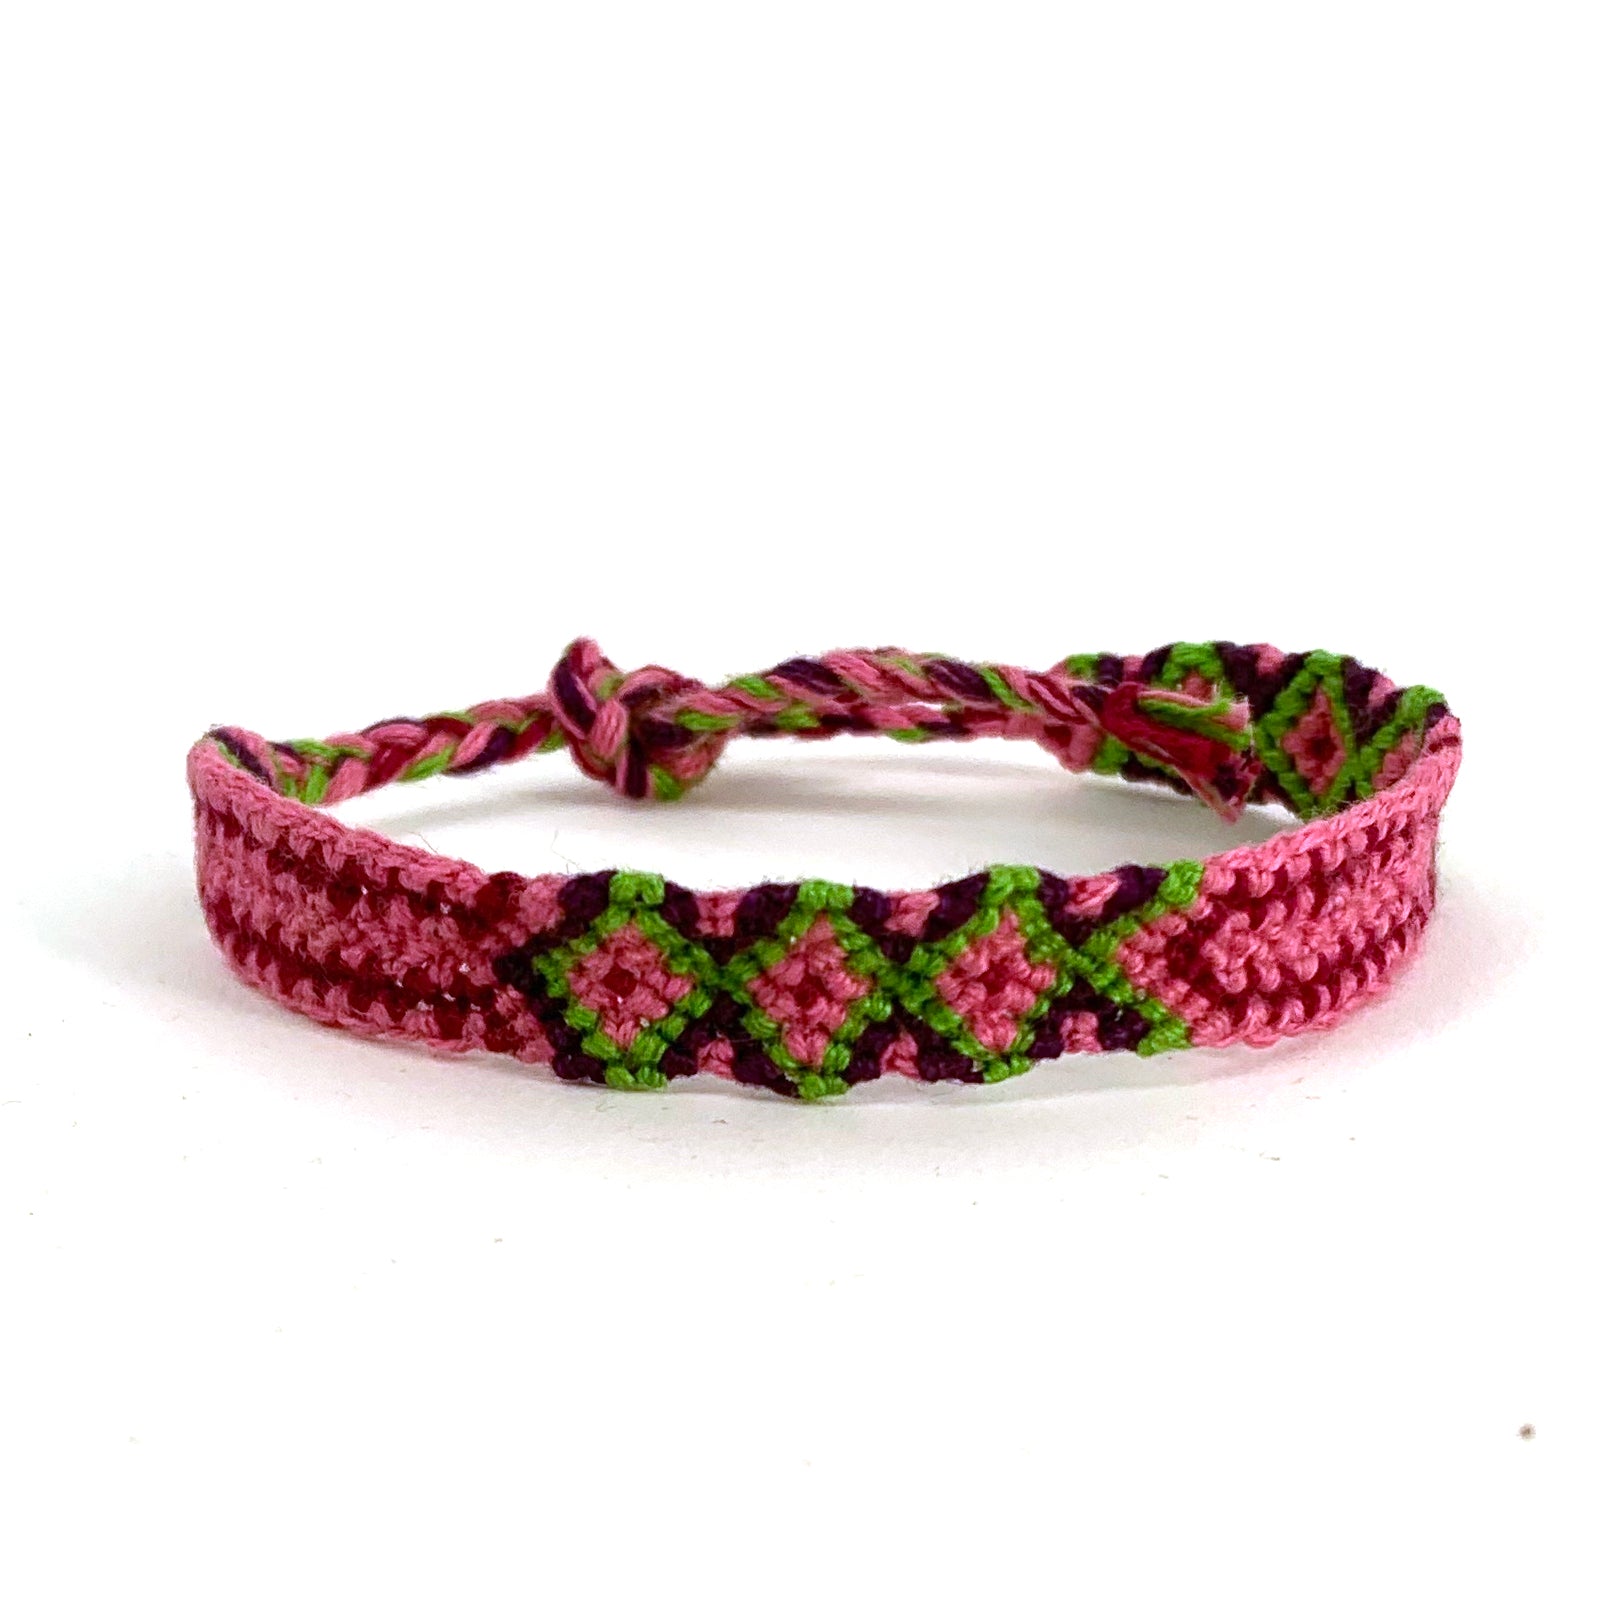 Crochet Bracelet Free Patterns For Summer and Spring New 2021 -  stunnerwoman. com